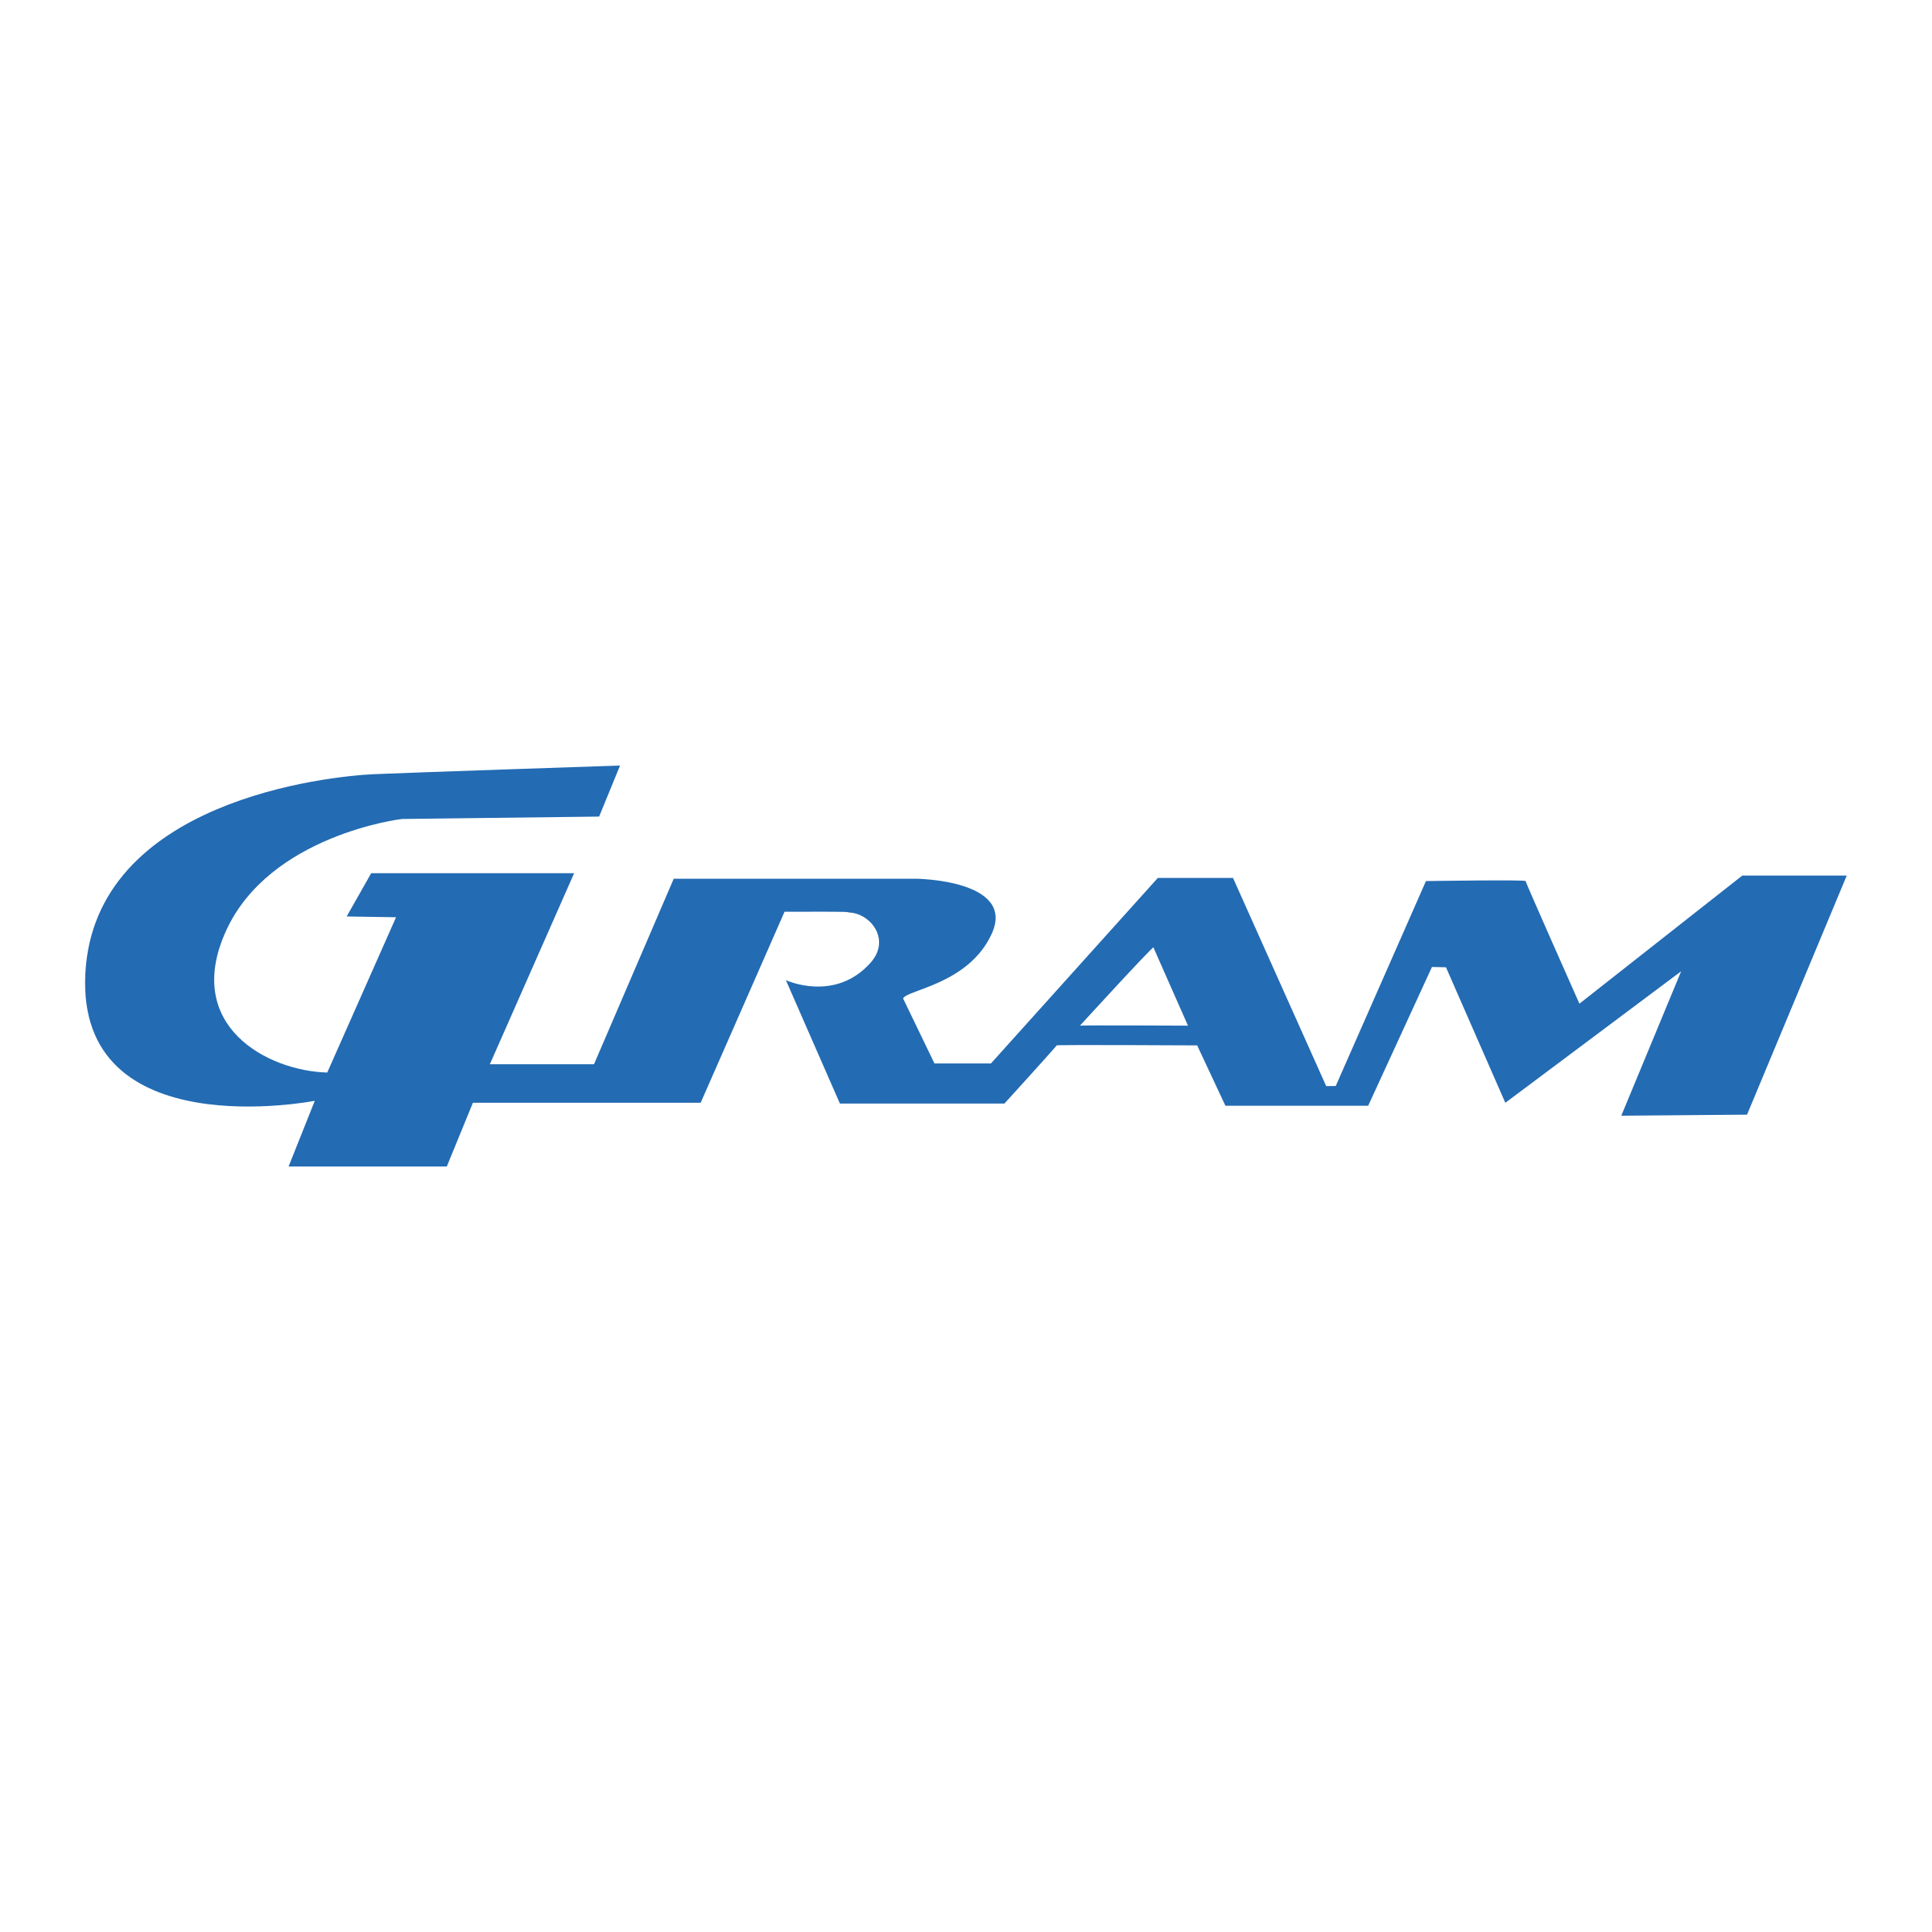 Gram Logo - Gram Logo PNG Transparent & SVG Vector - Freebie Supply